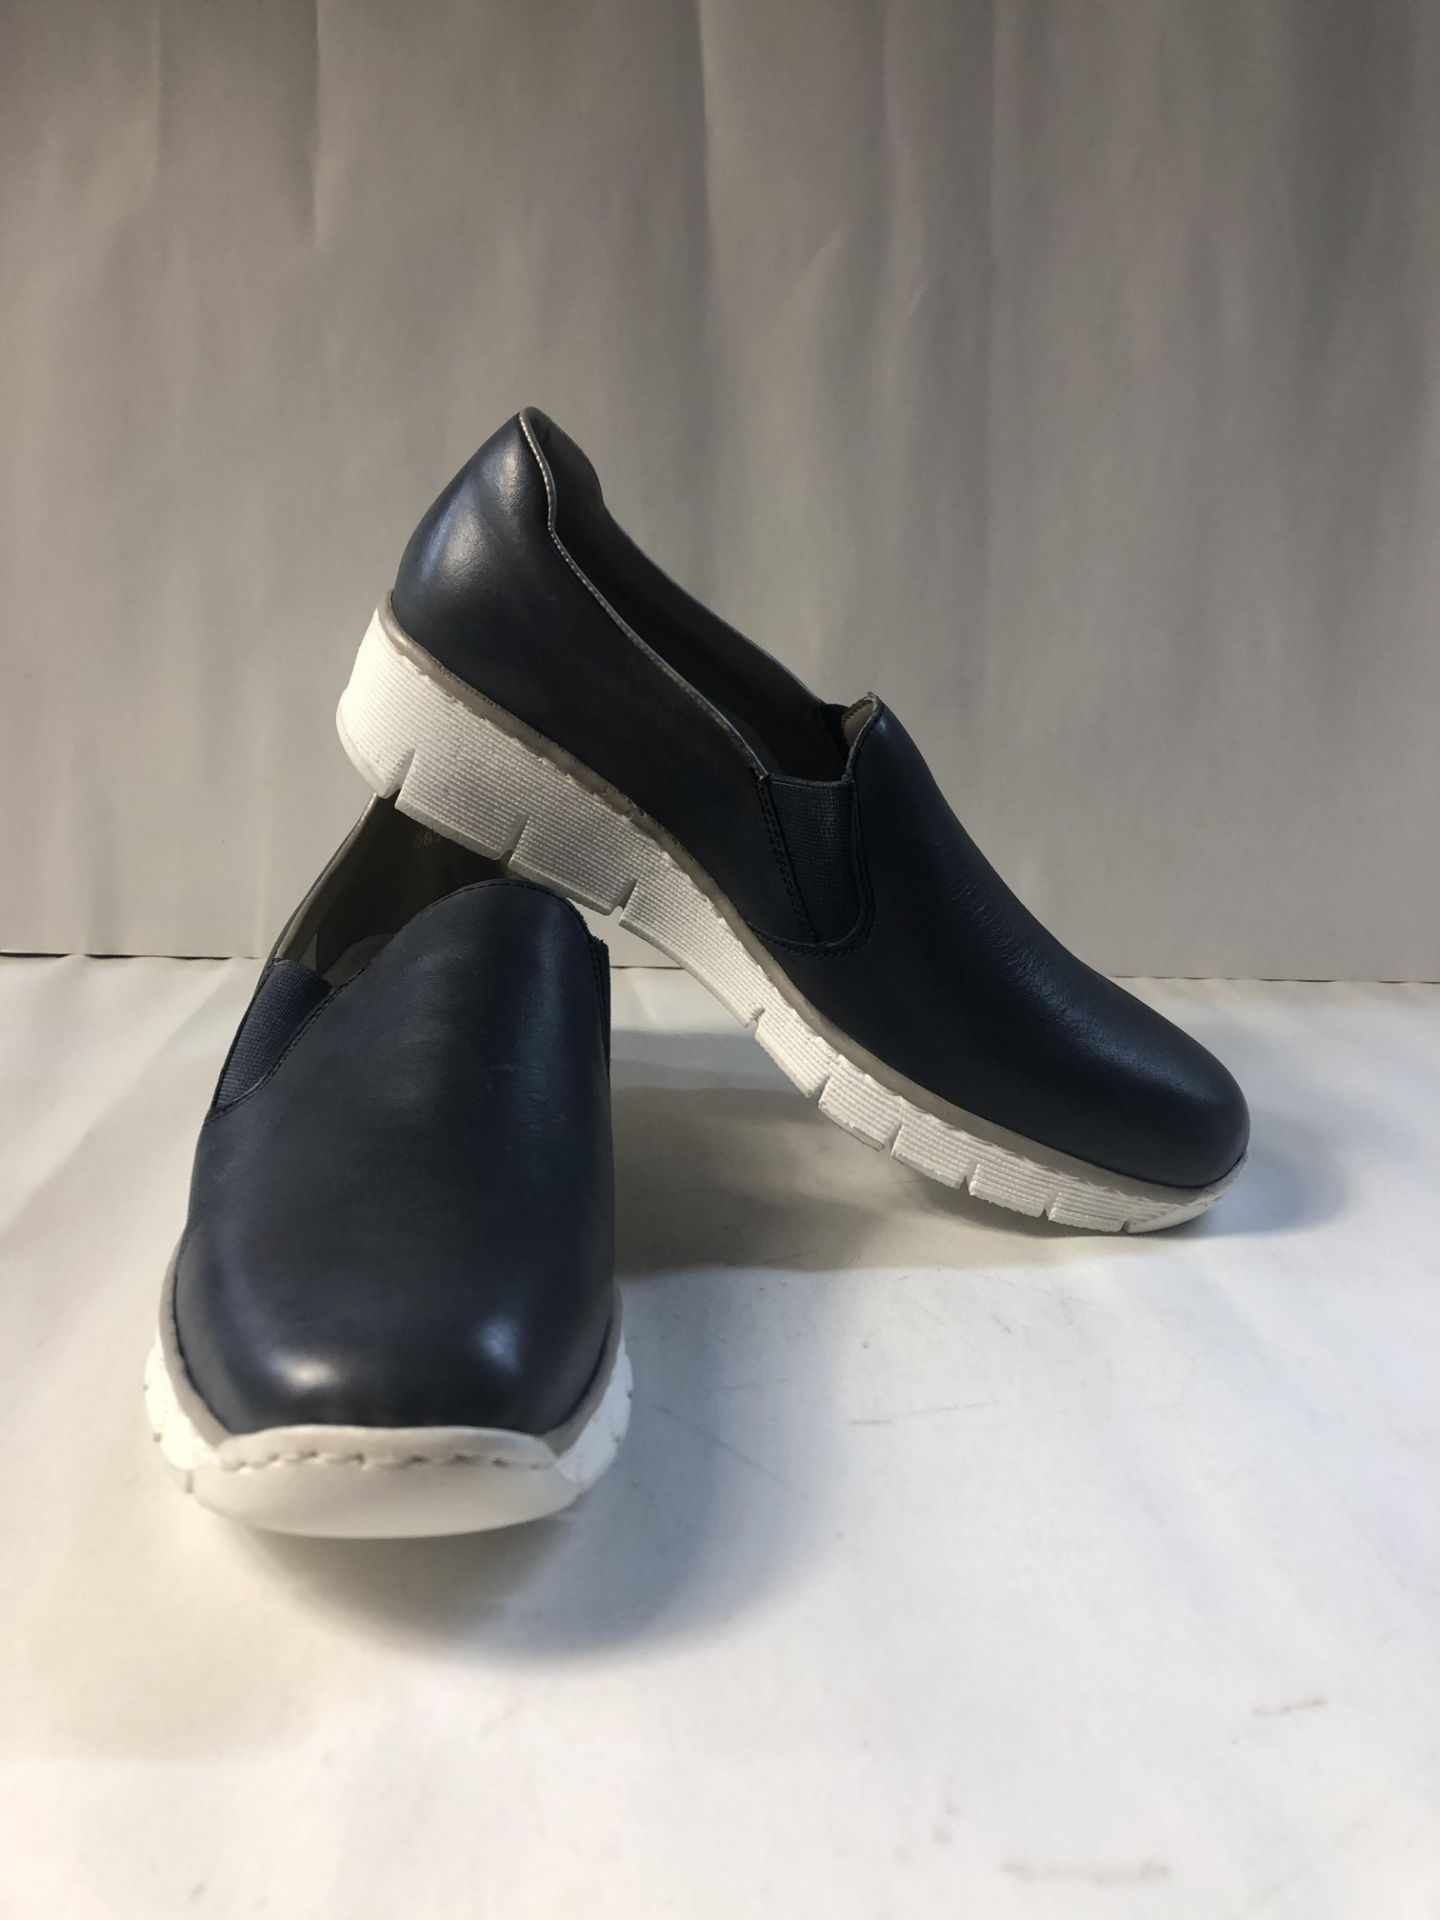 Rieker Stem Womens Casual Lace Up Shoes 4/37 White Multi 5 UK Women’s Shoetique83006 |4059954978893 - Image 3 of 3